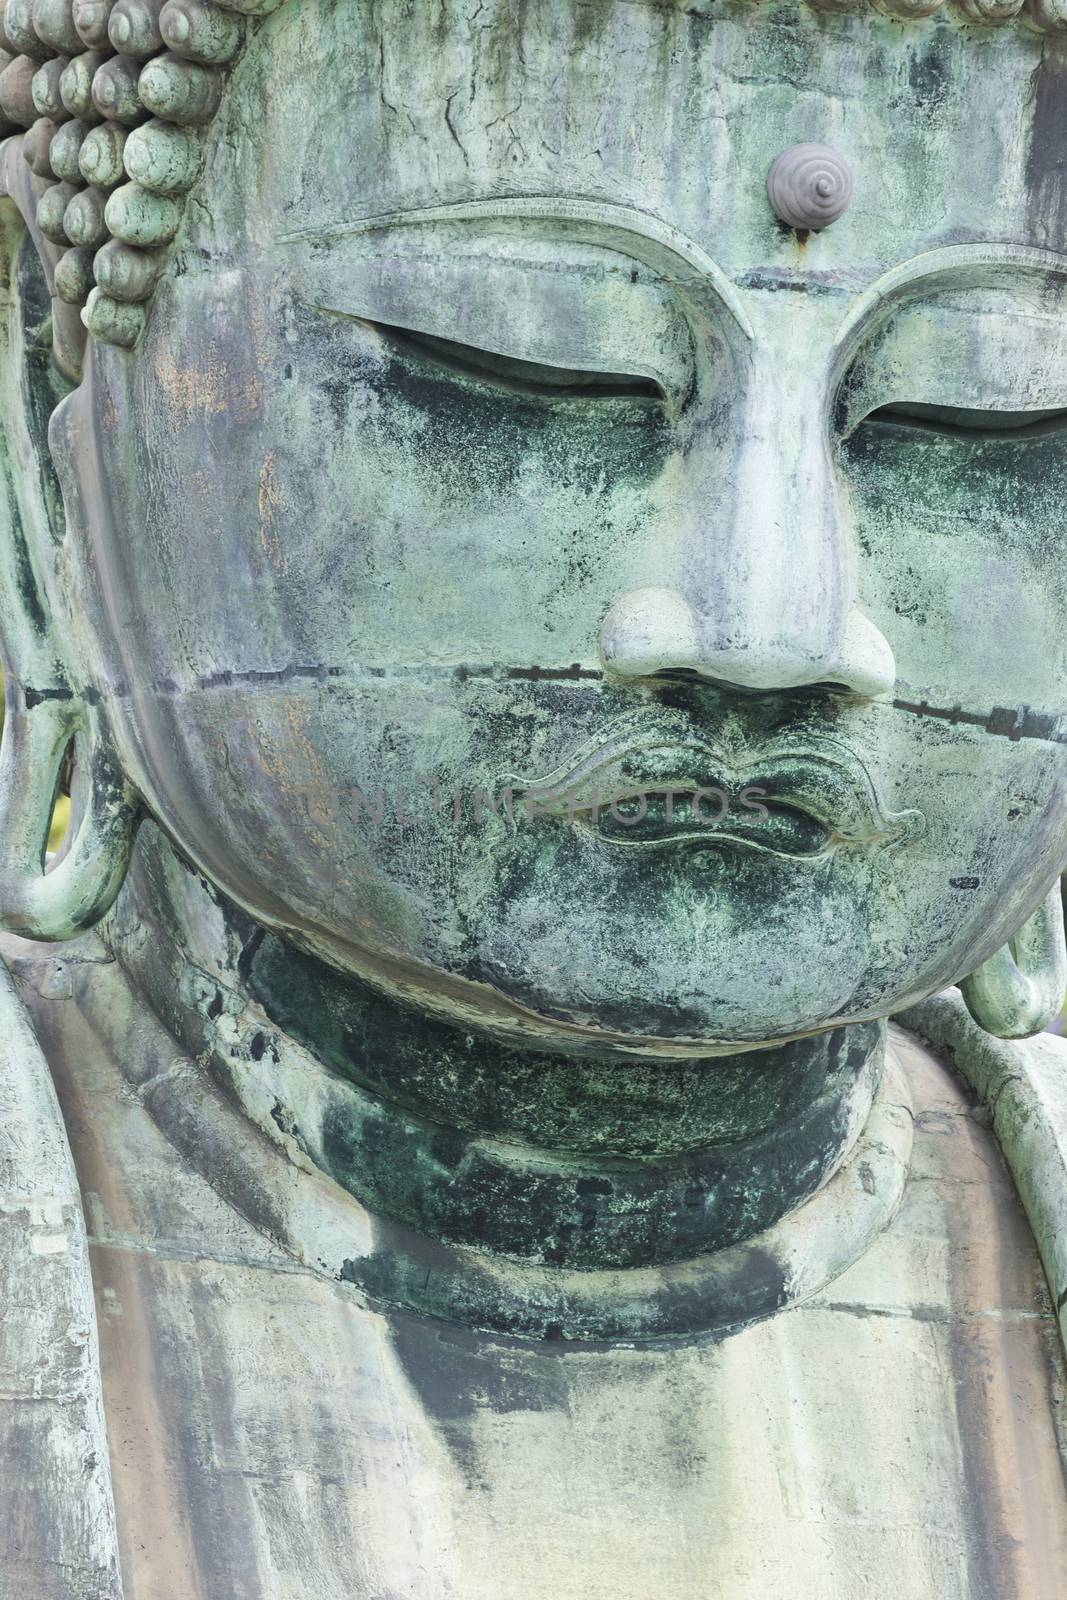 The Great Buddha (Daibutsu) on the grounds of Kotokuin Temple in Kamakura, Japan.

